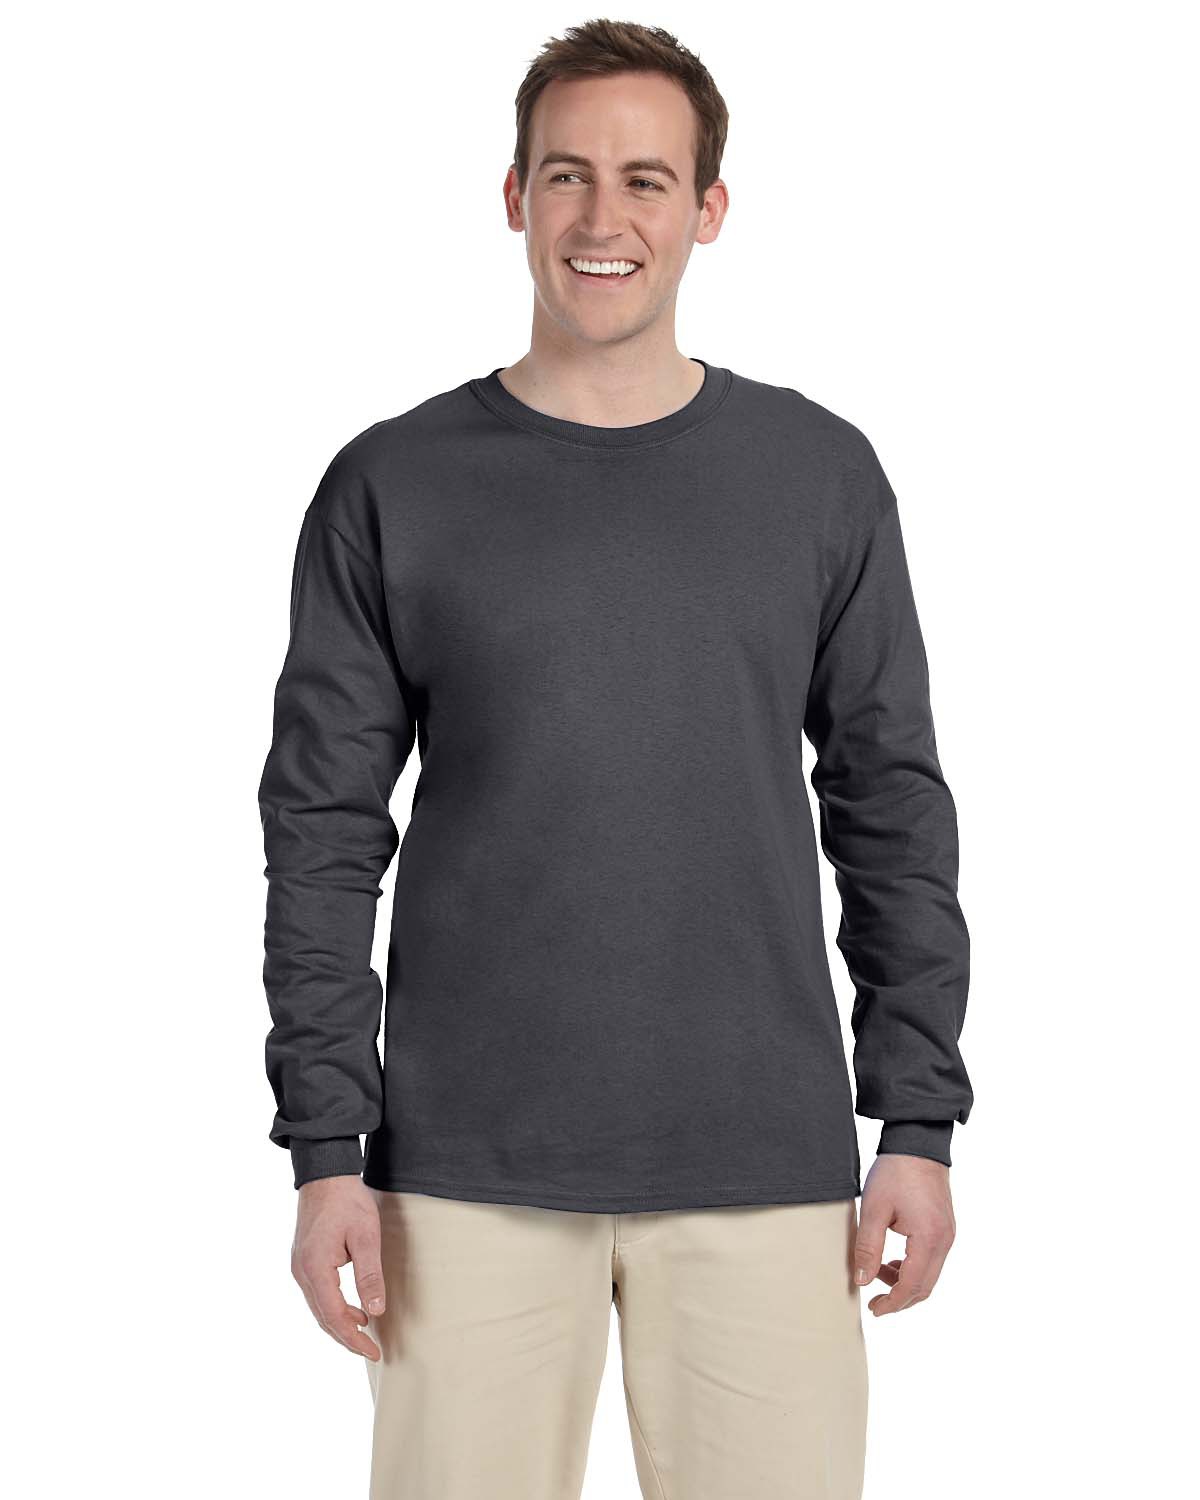 Maroon Adult Gildan Long Sleeve Ultra Cotton t-shirt-Mens Tops s m l xl 2xl 